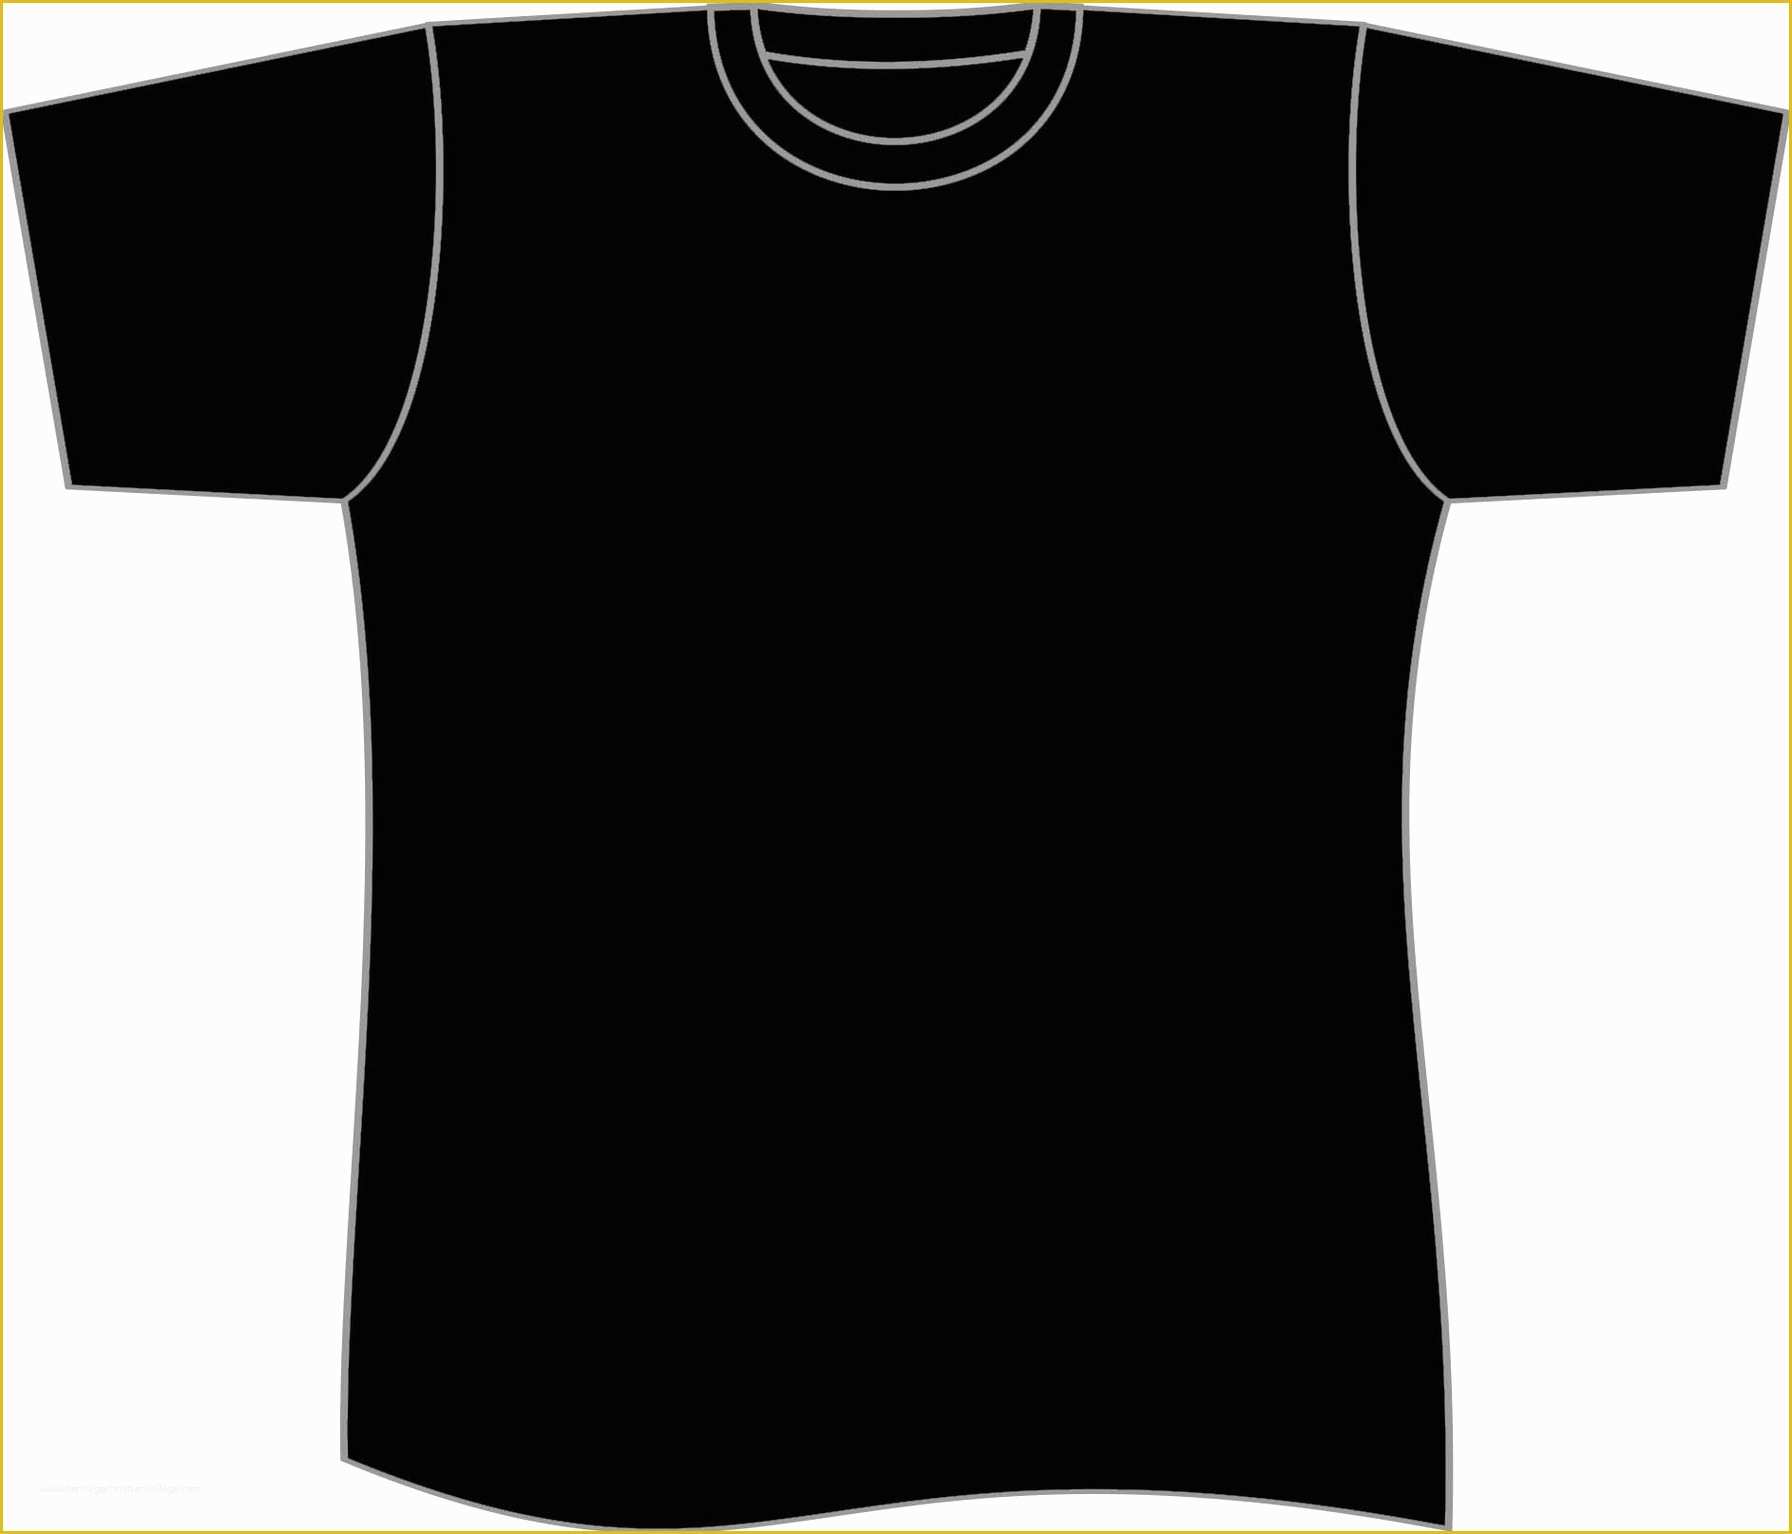 Free Shirt Templates Of Black T Shirt Clip Art to Pin On Pinterest ...